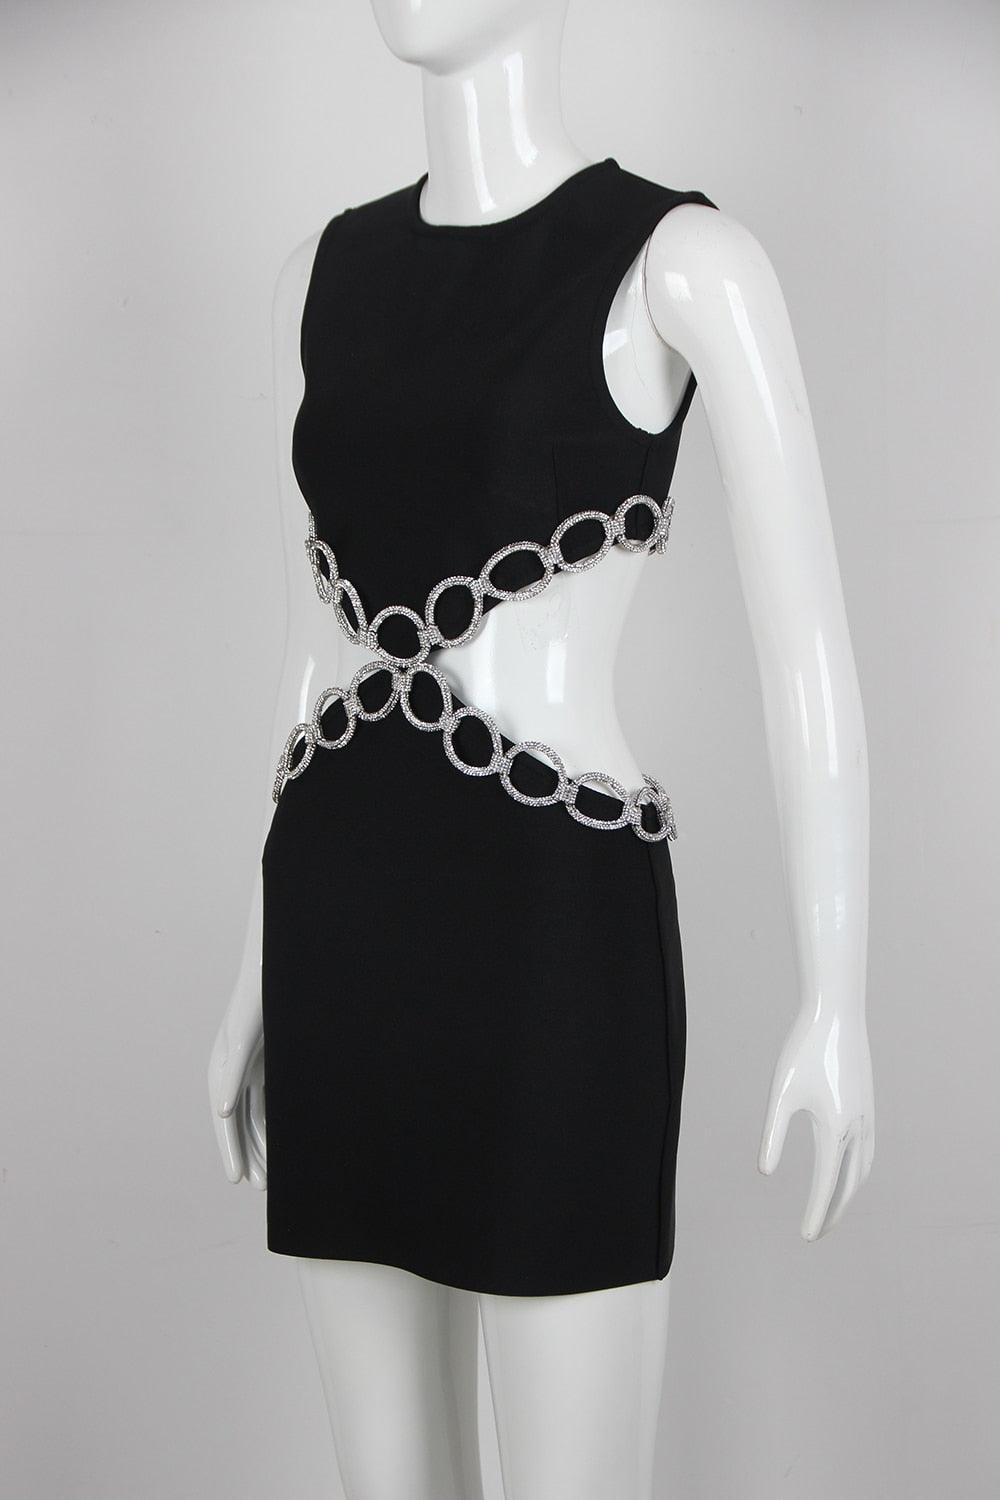 Ava Backless DiamondMini Dress from The House of CO-KY - Dresses